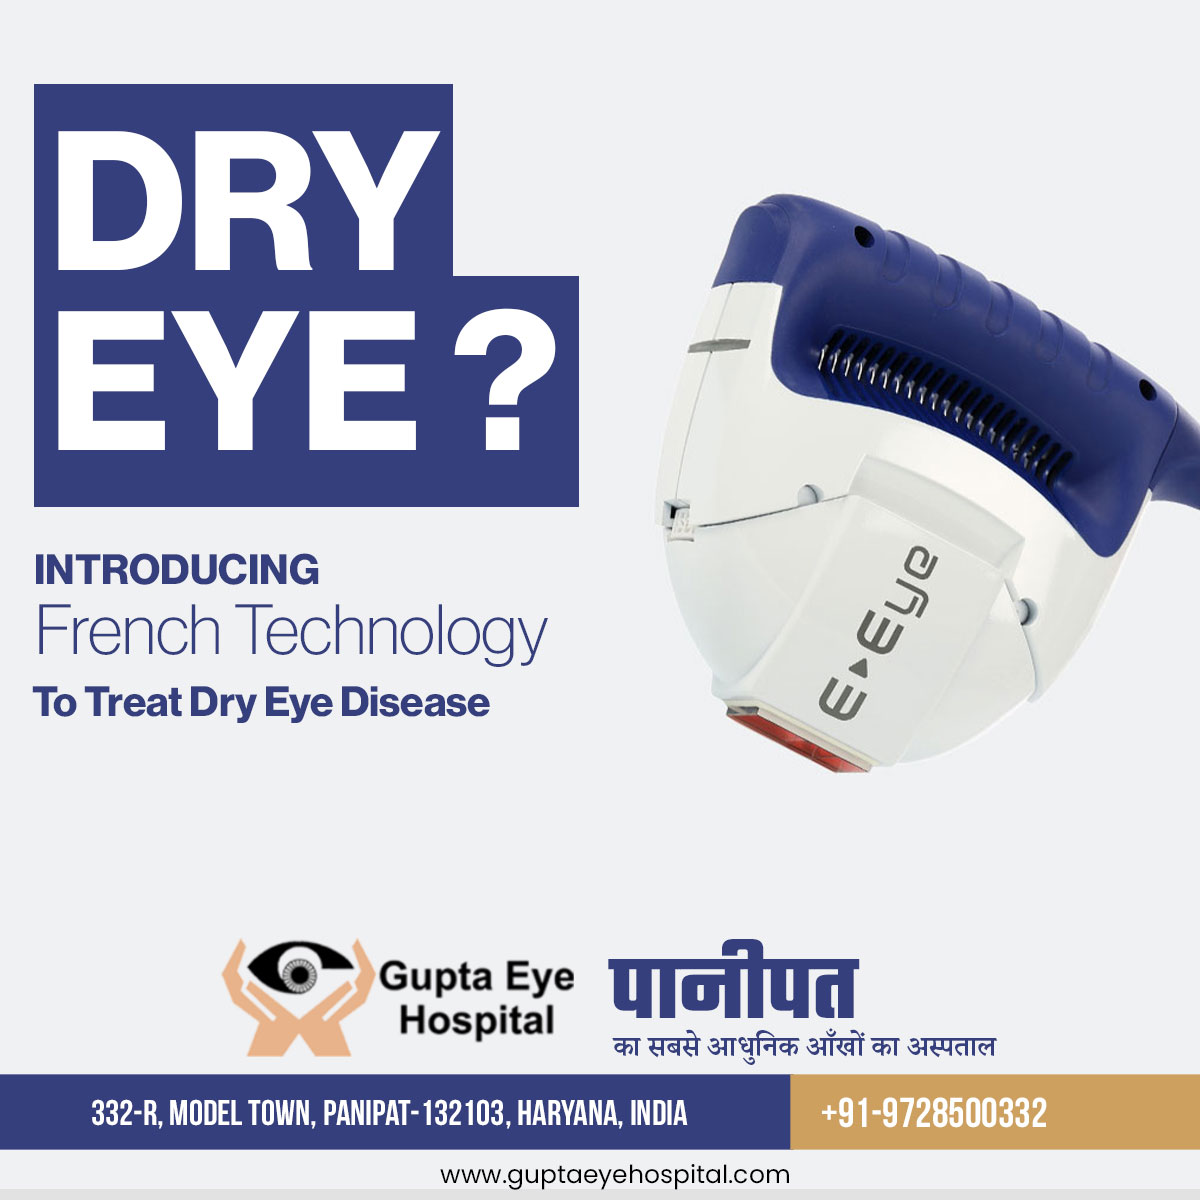 Dry Eye Treatment in panipat with French Technology | Gupta Eye Hospital